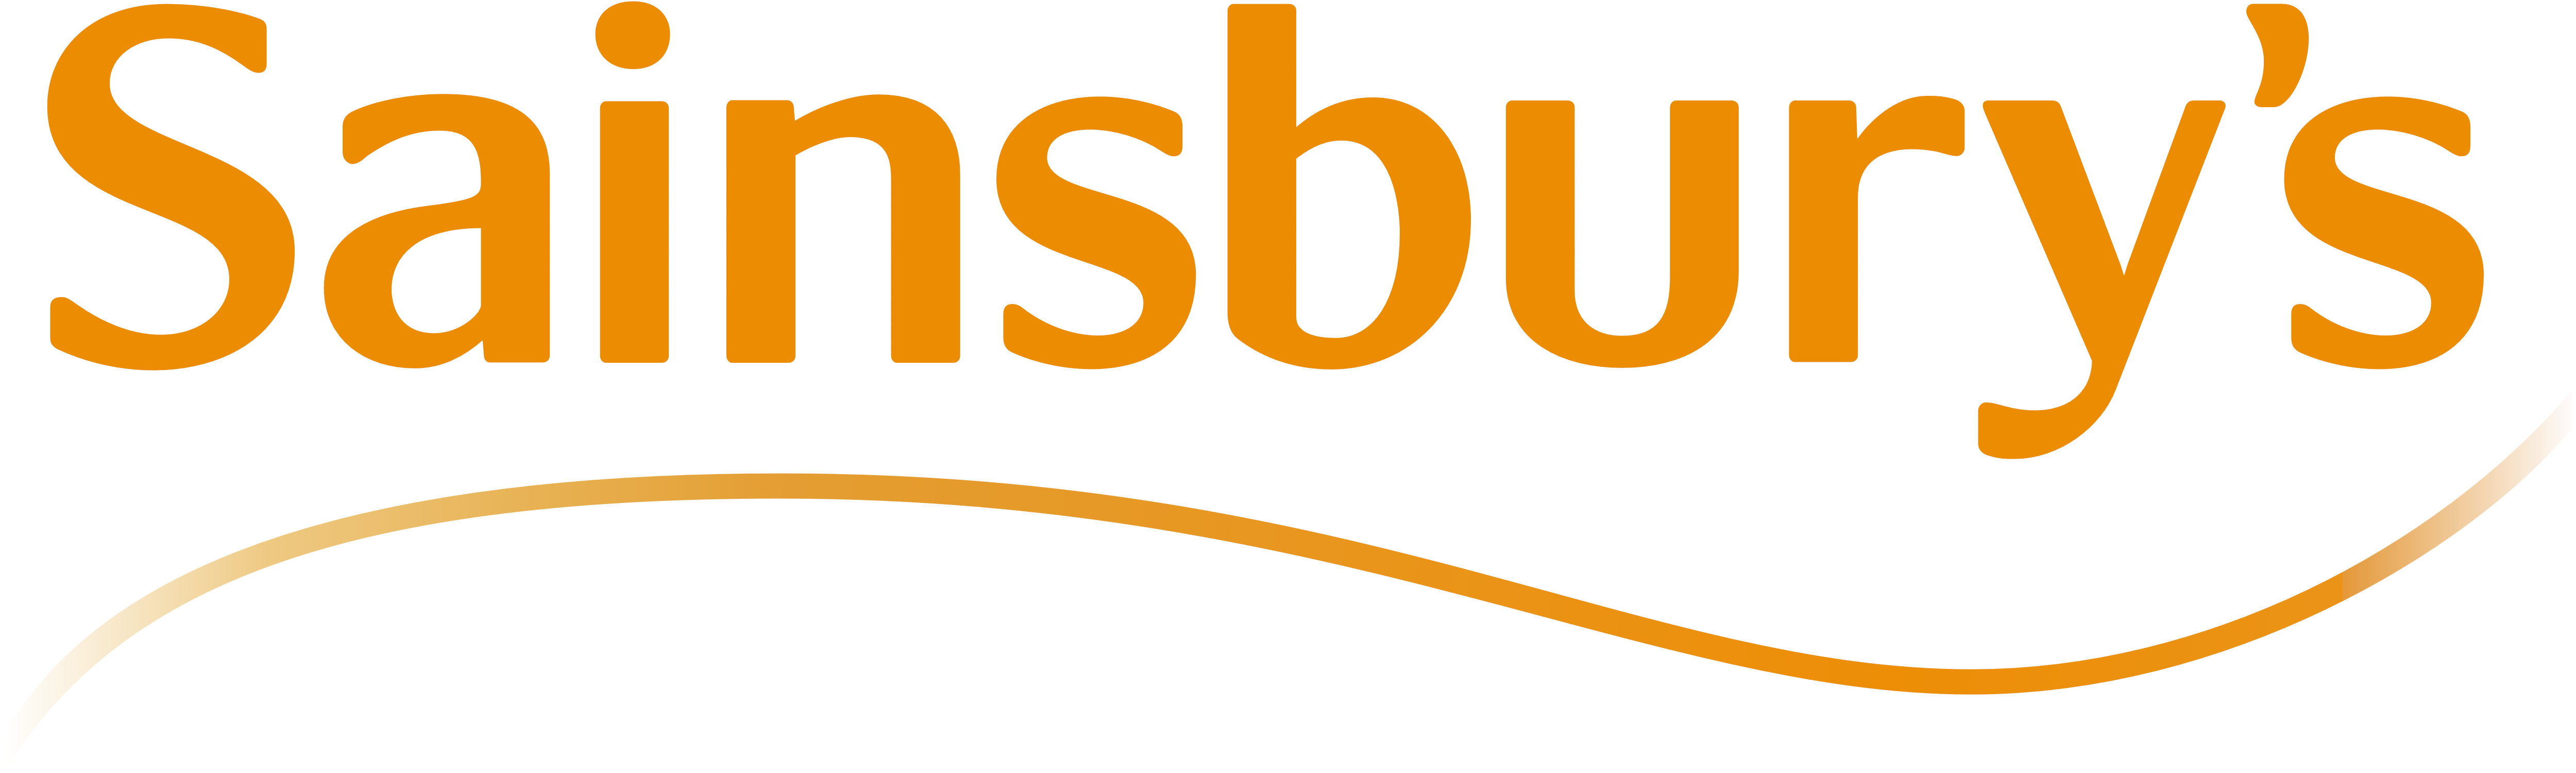 Sainsburys_logo